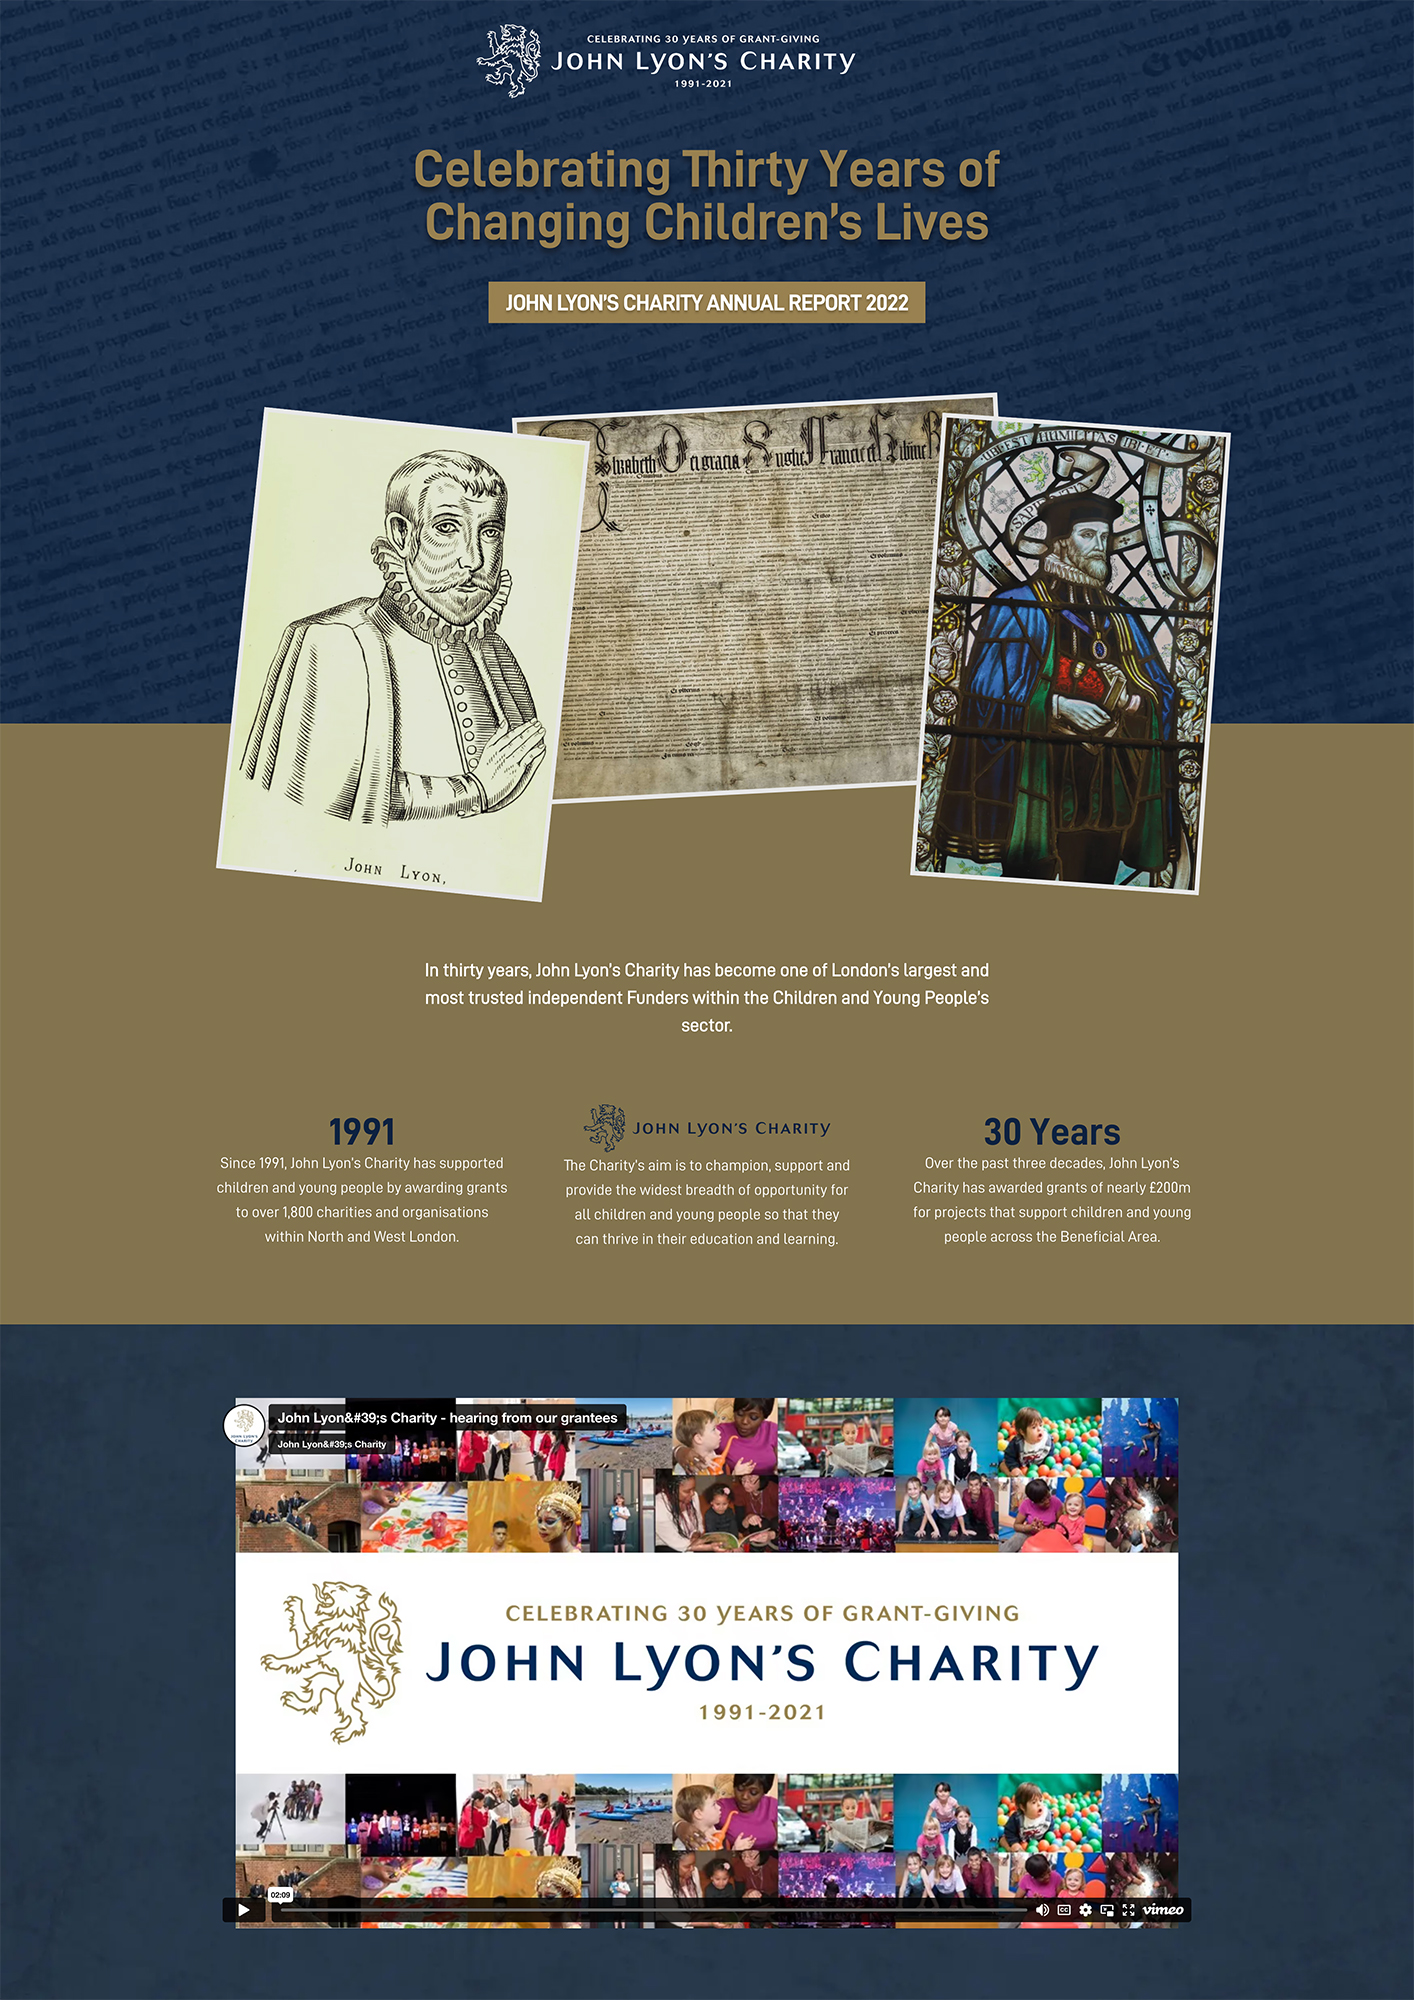 John Lyons Charity online annual report website